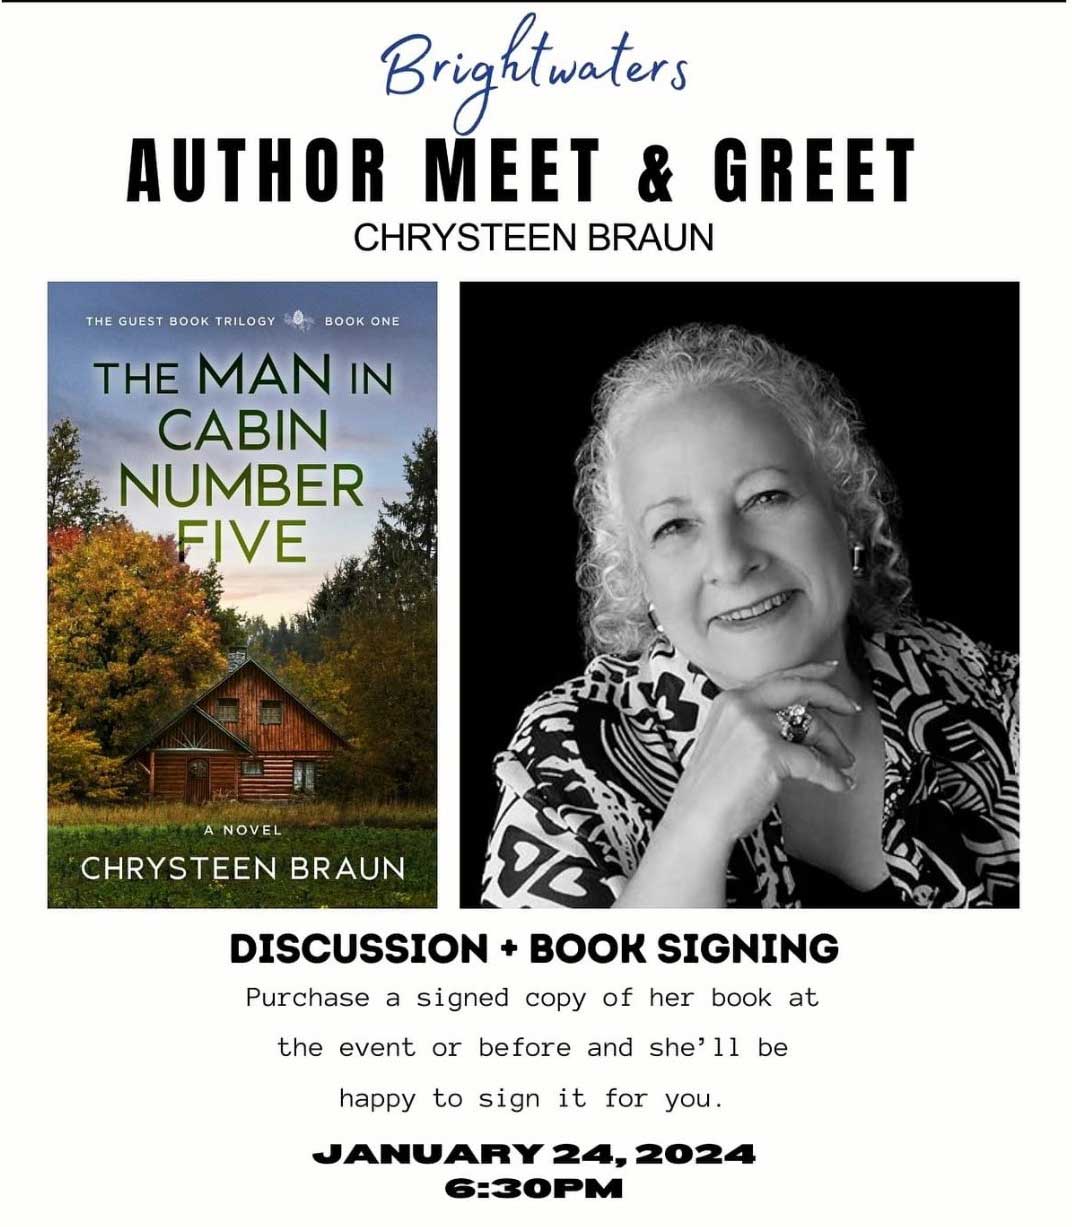 Brightwater Author Meet & Greet with Chrysteen Braun